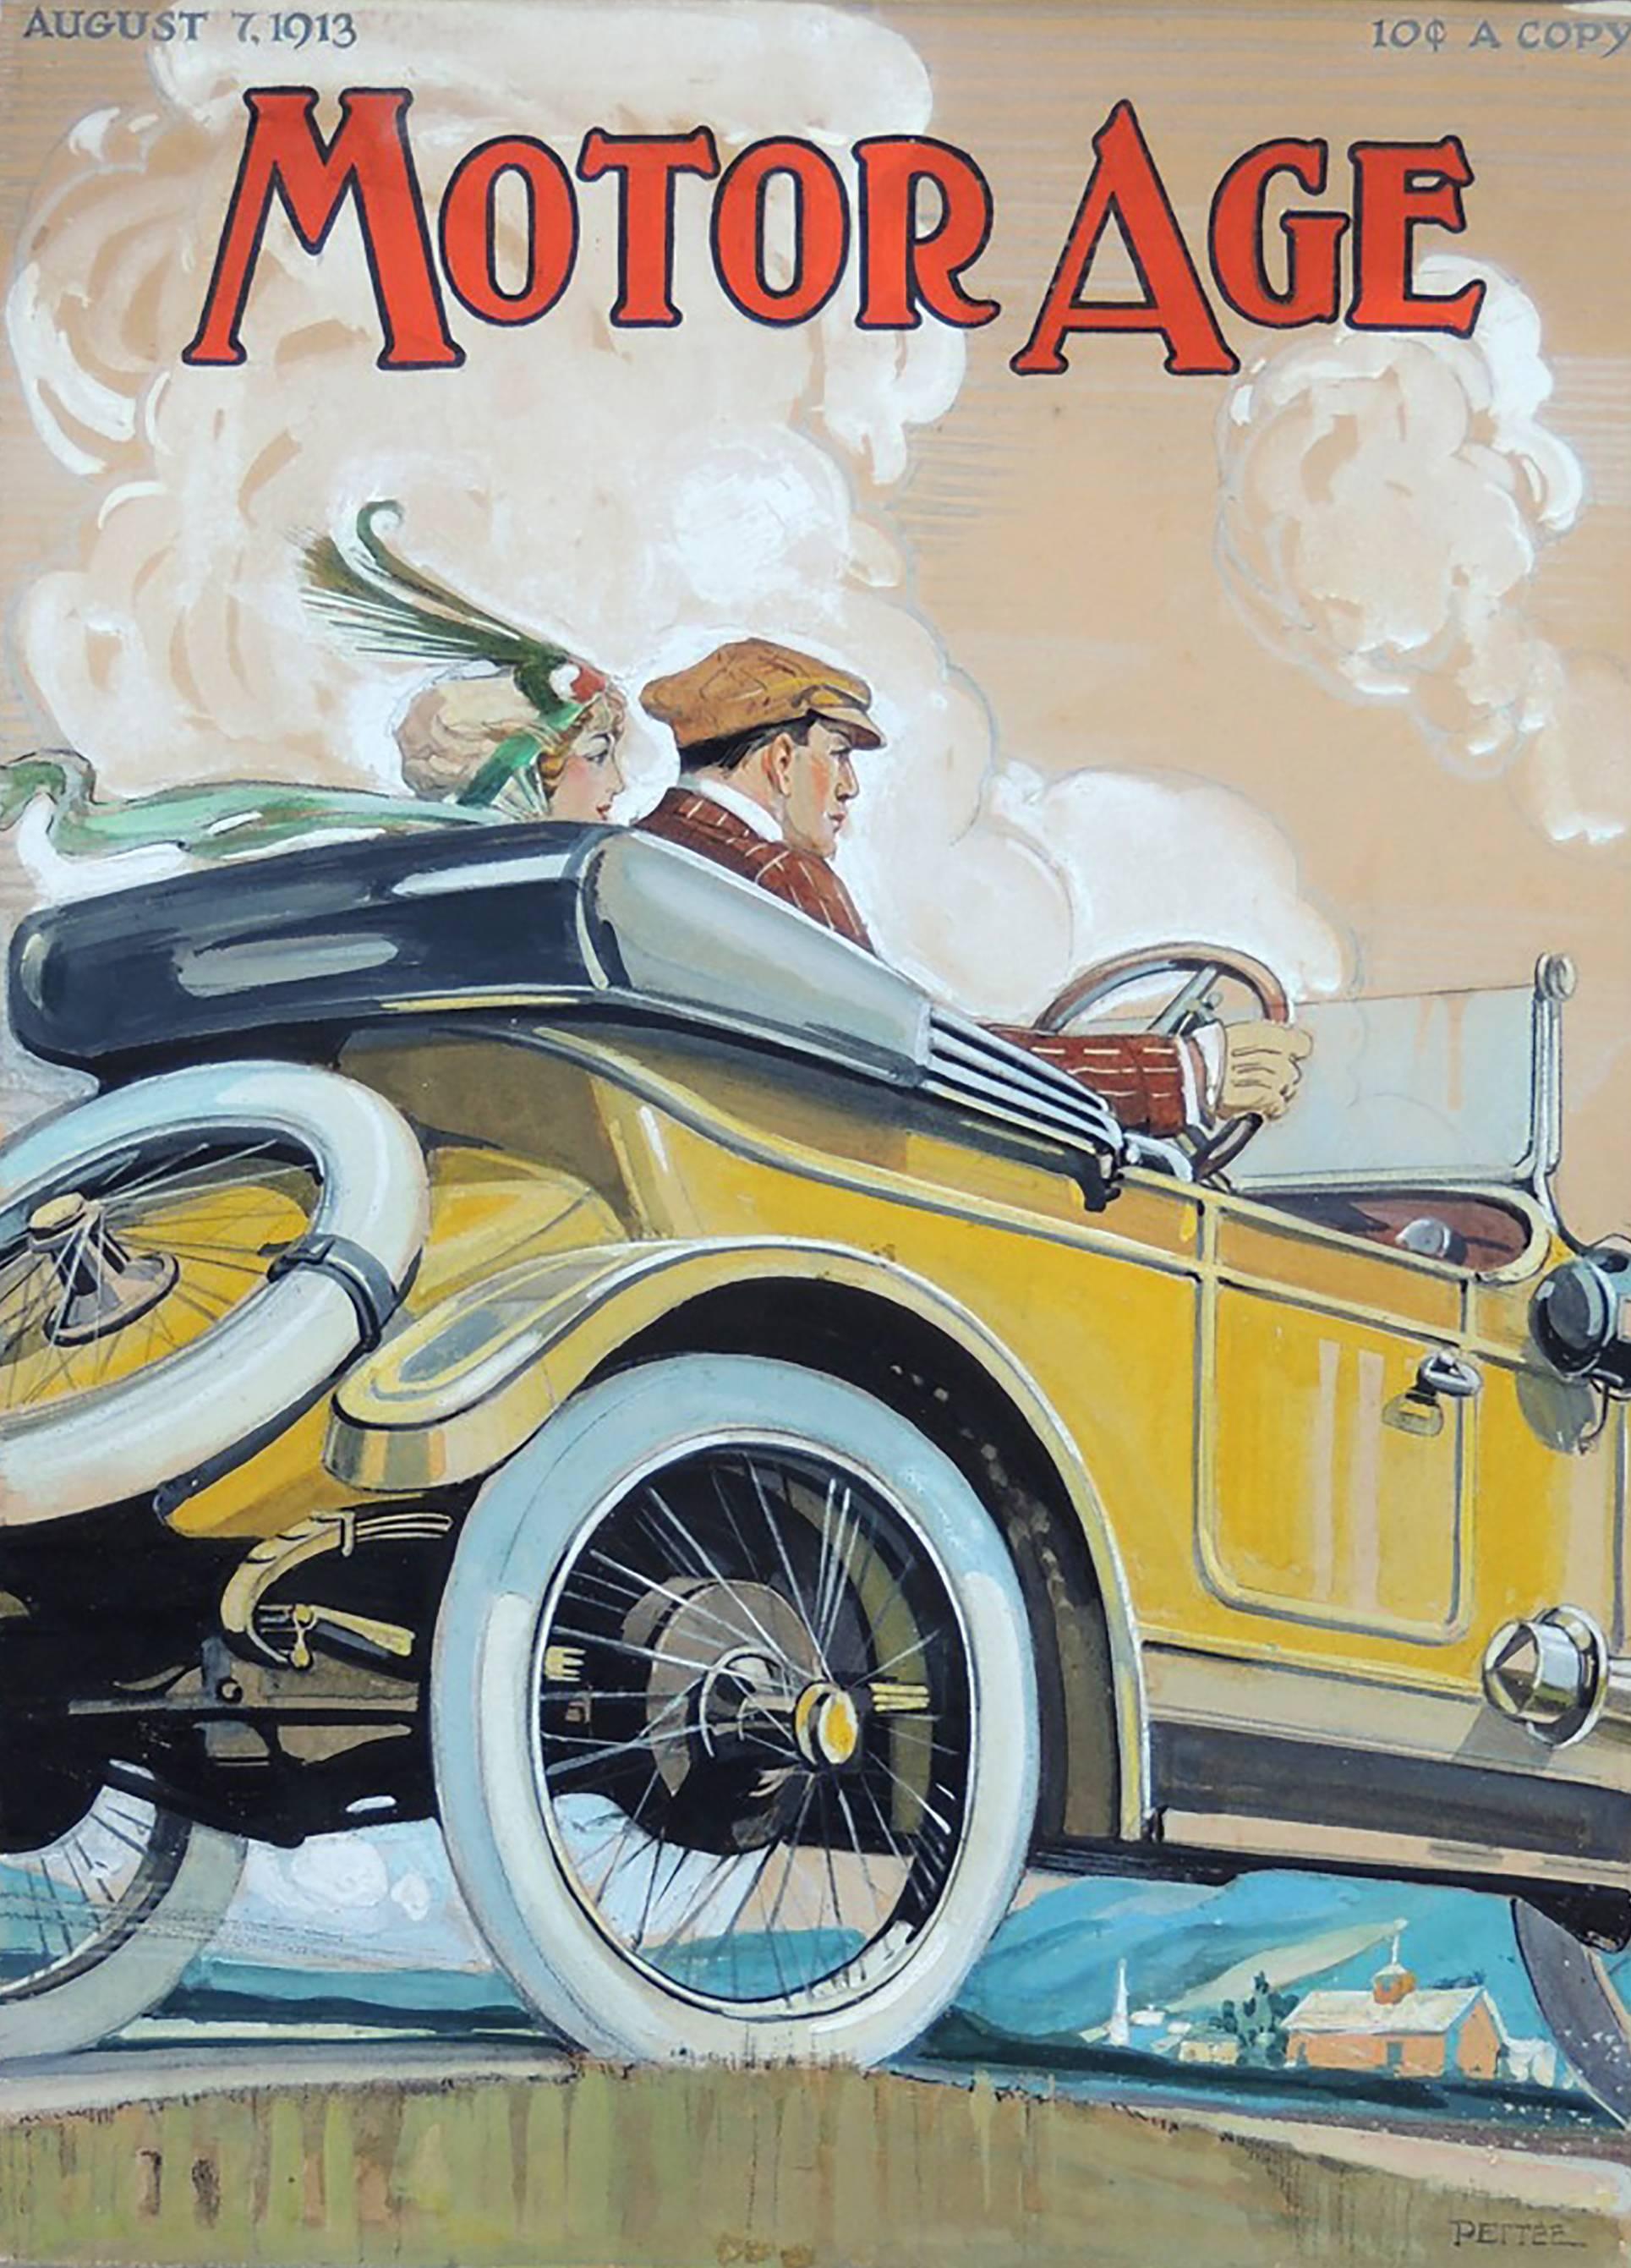 Clinton Pettee Figurative Painting - Original 1913 Motor Age Magazine Cover Art Illustration